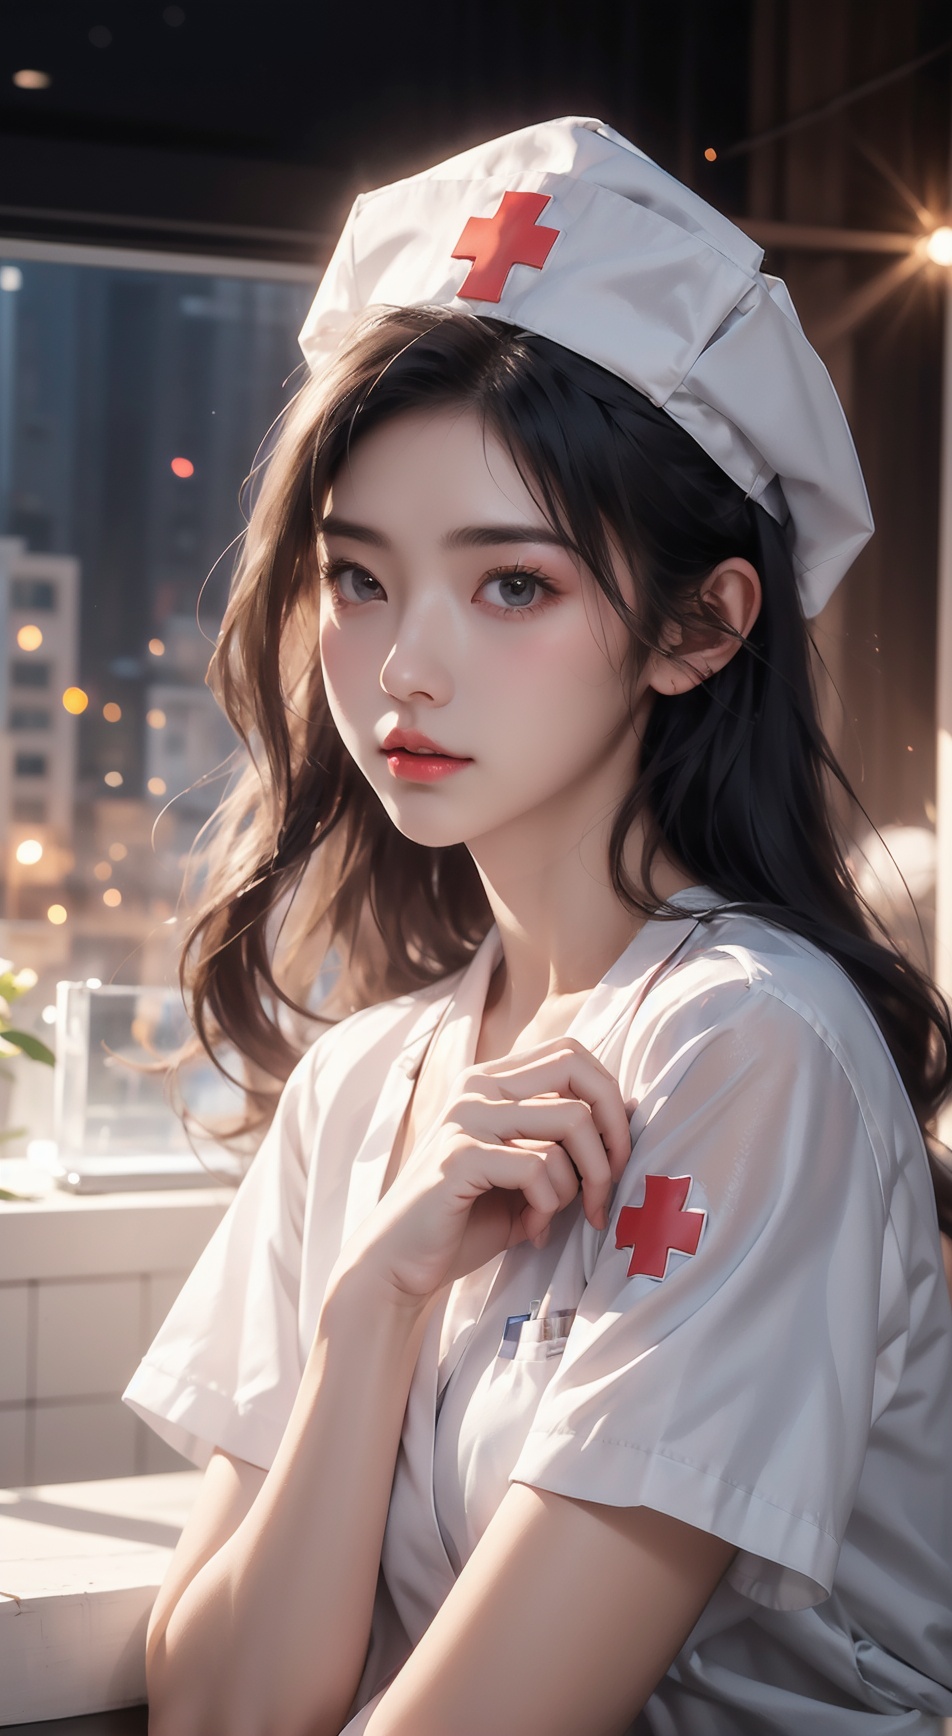  1 girl, wearing transparent white gauze nurse uniform, nurse hat, red cross,Nebula, tutututu, 21yo girl